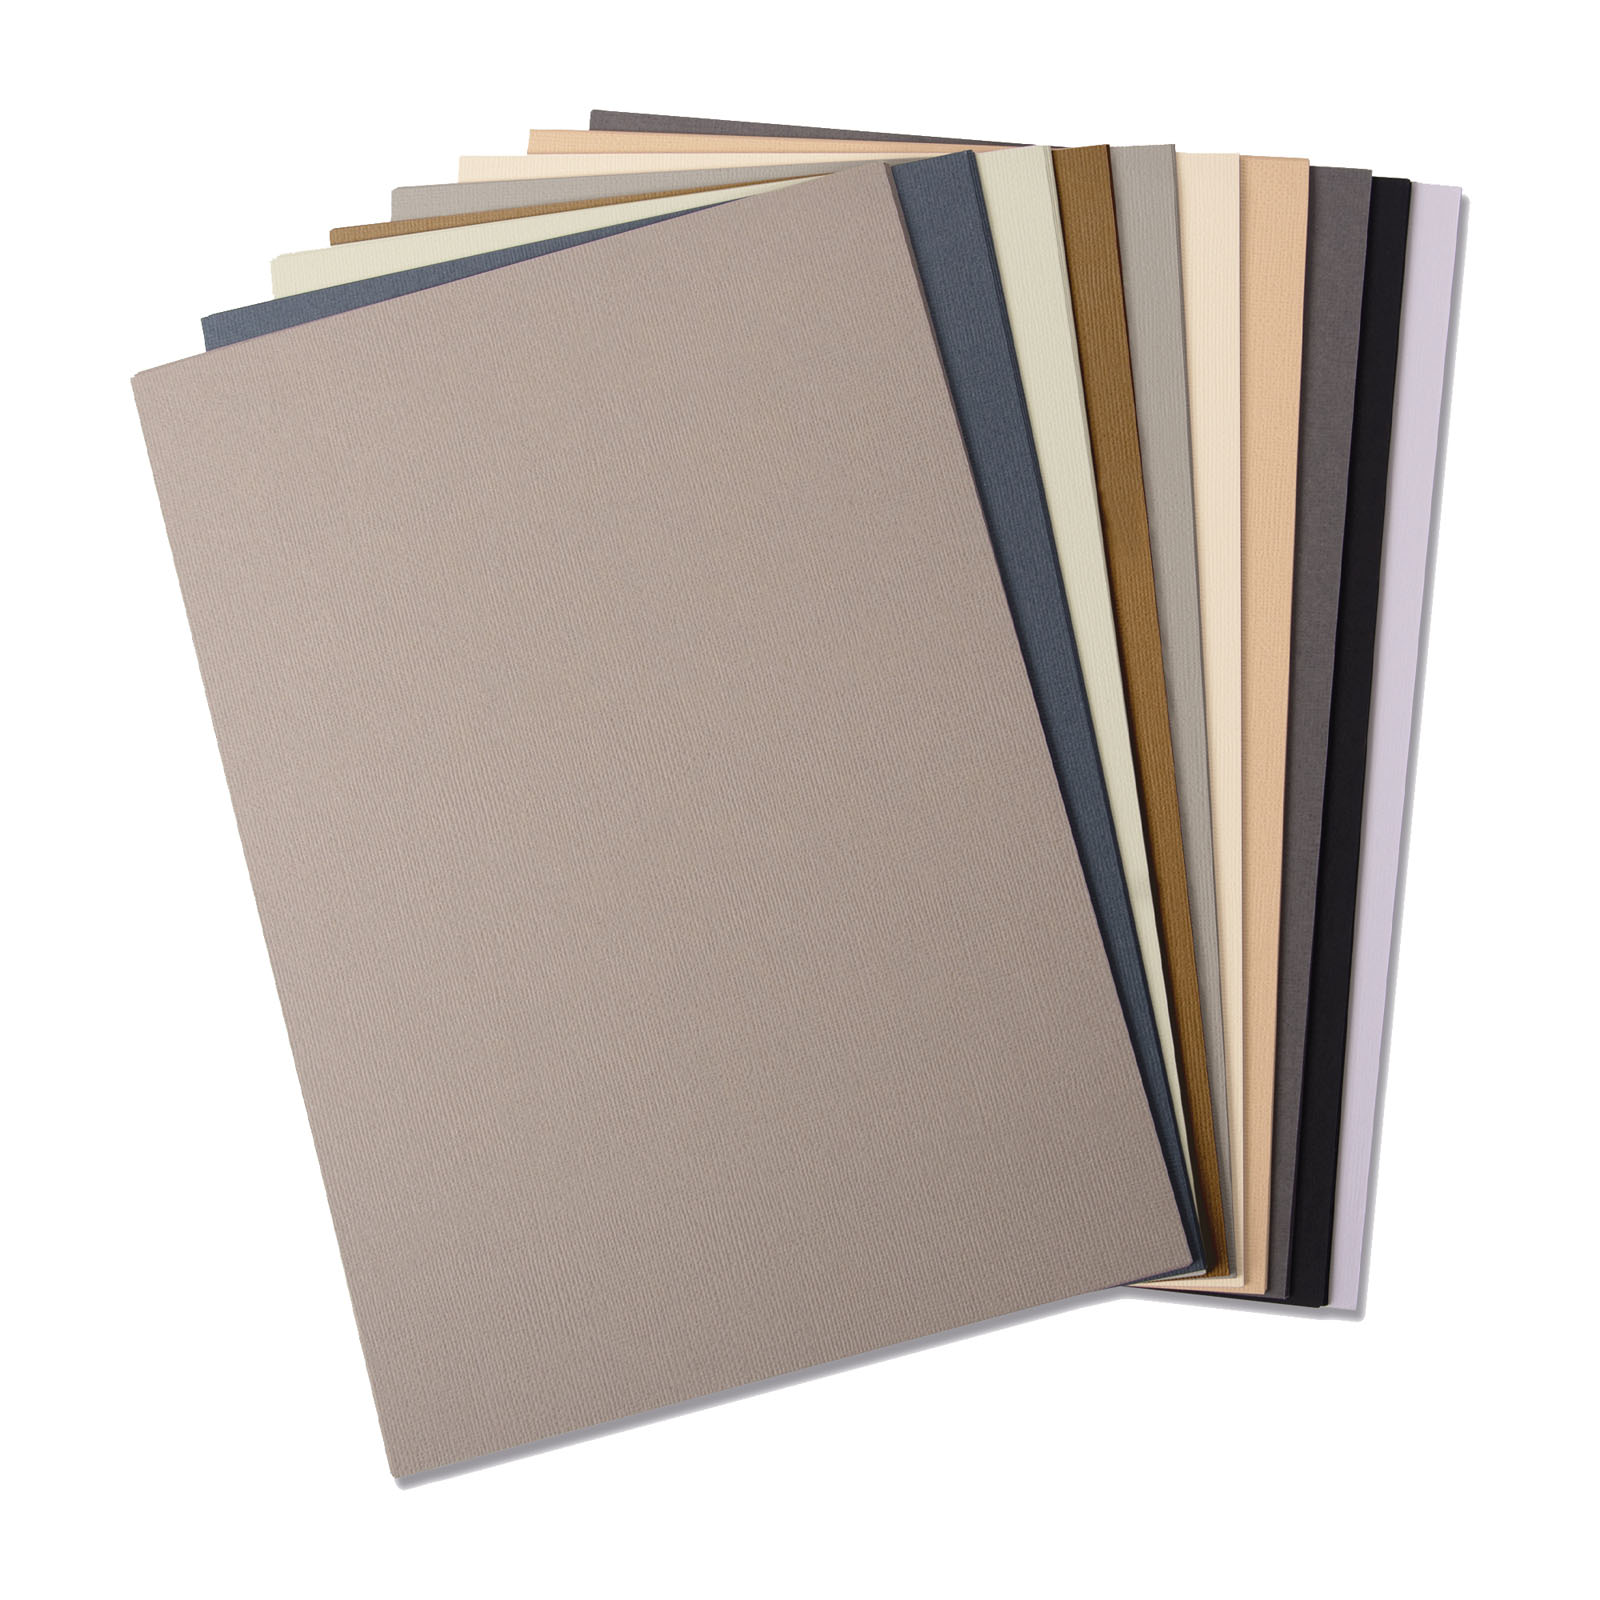 Sizzix • Surfacez Kartonblätter A4 60PK (10 neutrale Farben)